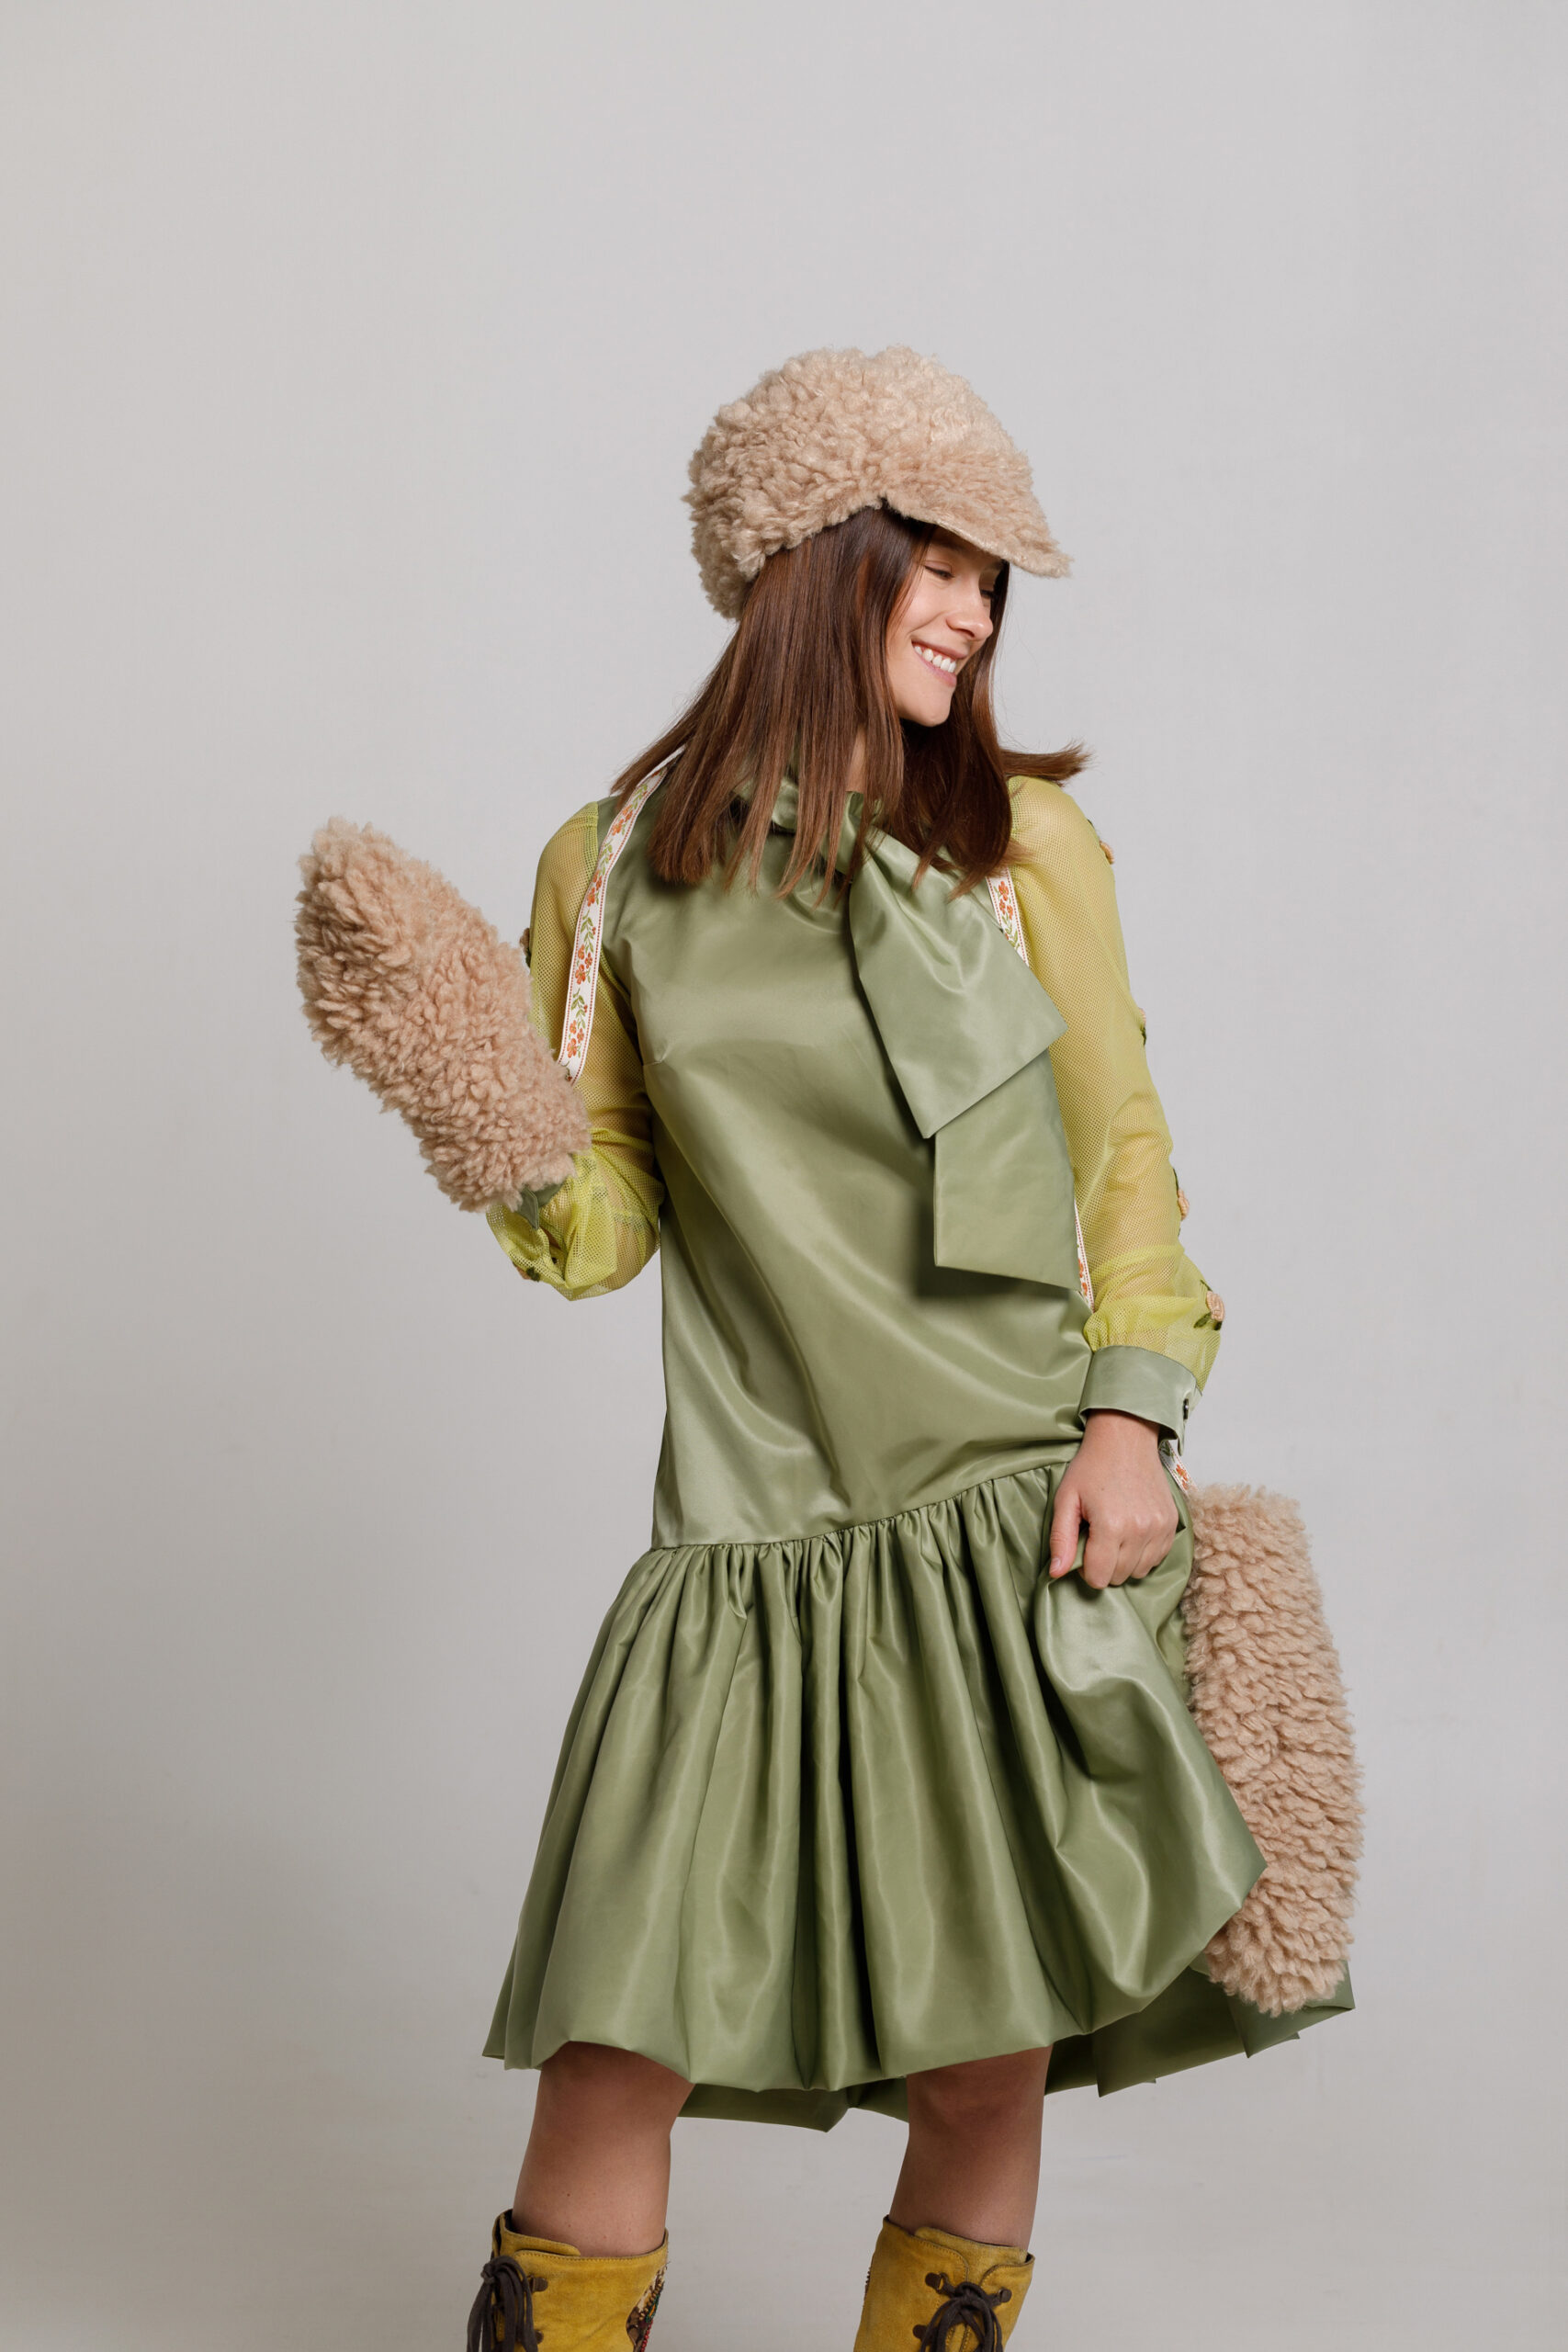 DRESS AMORA casual green satin and mesh. Natural fabrics, original design, handmade embroidery